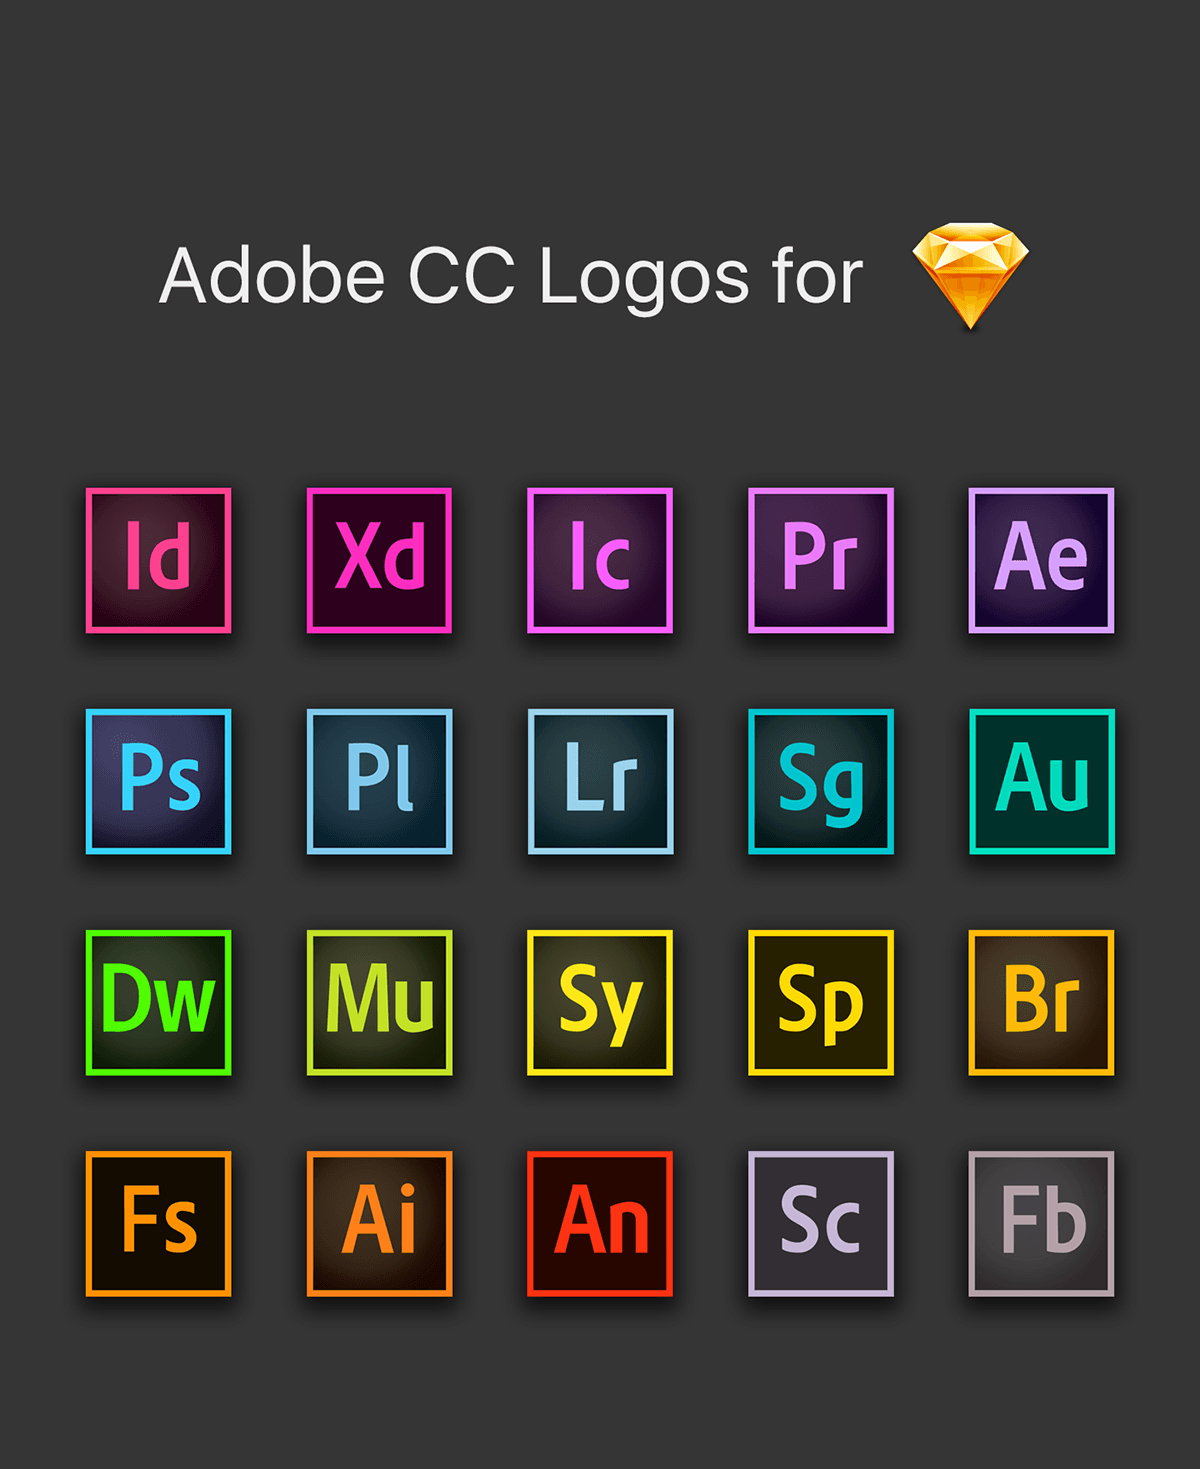 Adobe CC Logo - Adobe CC Logos for Sketch on Behance